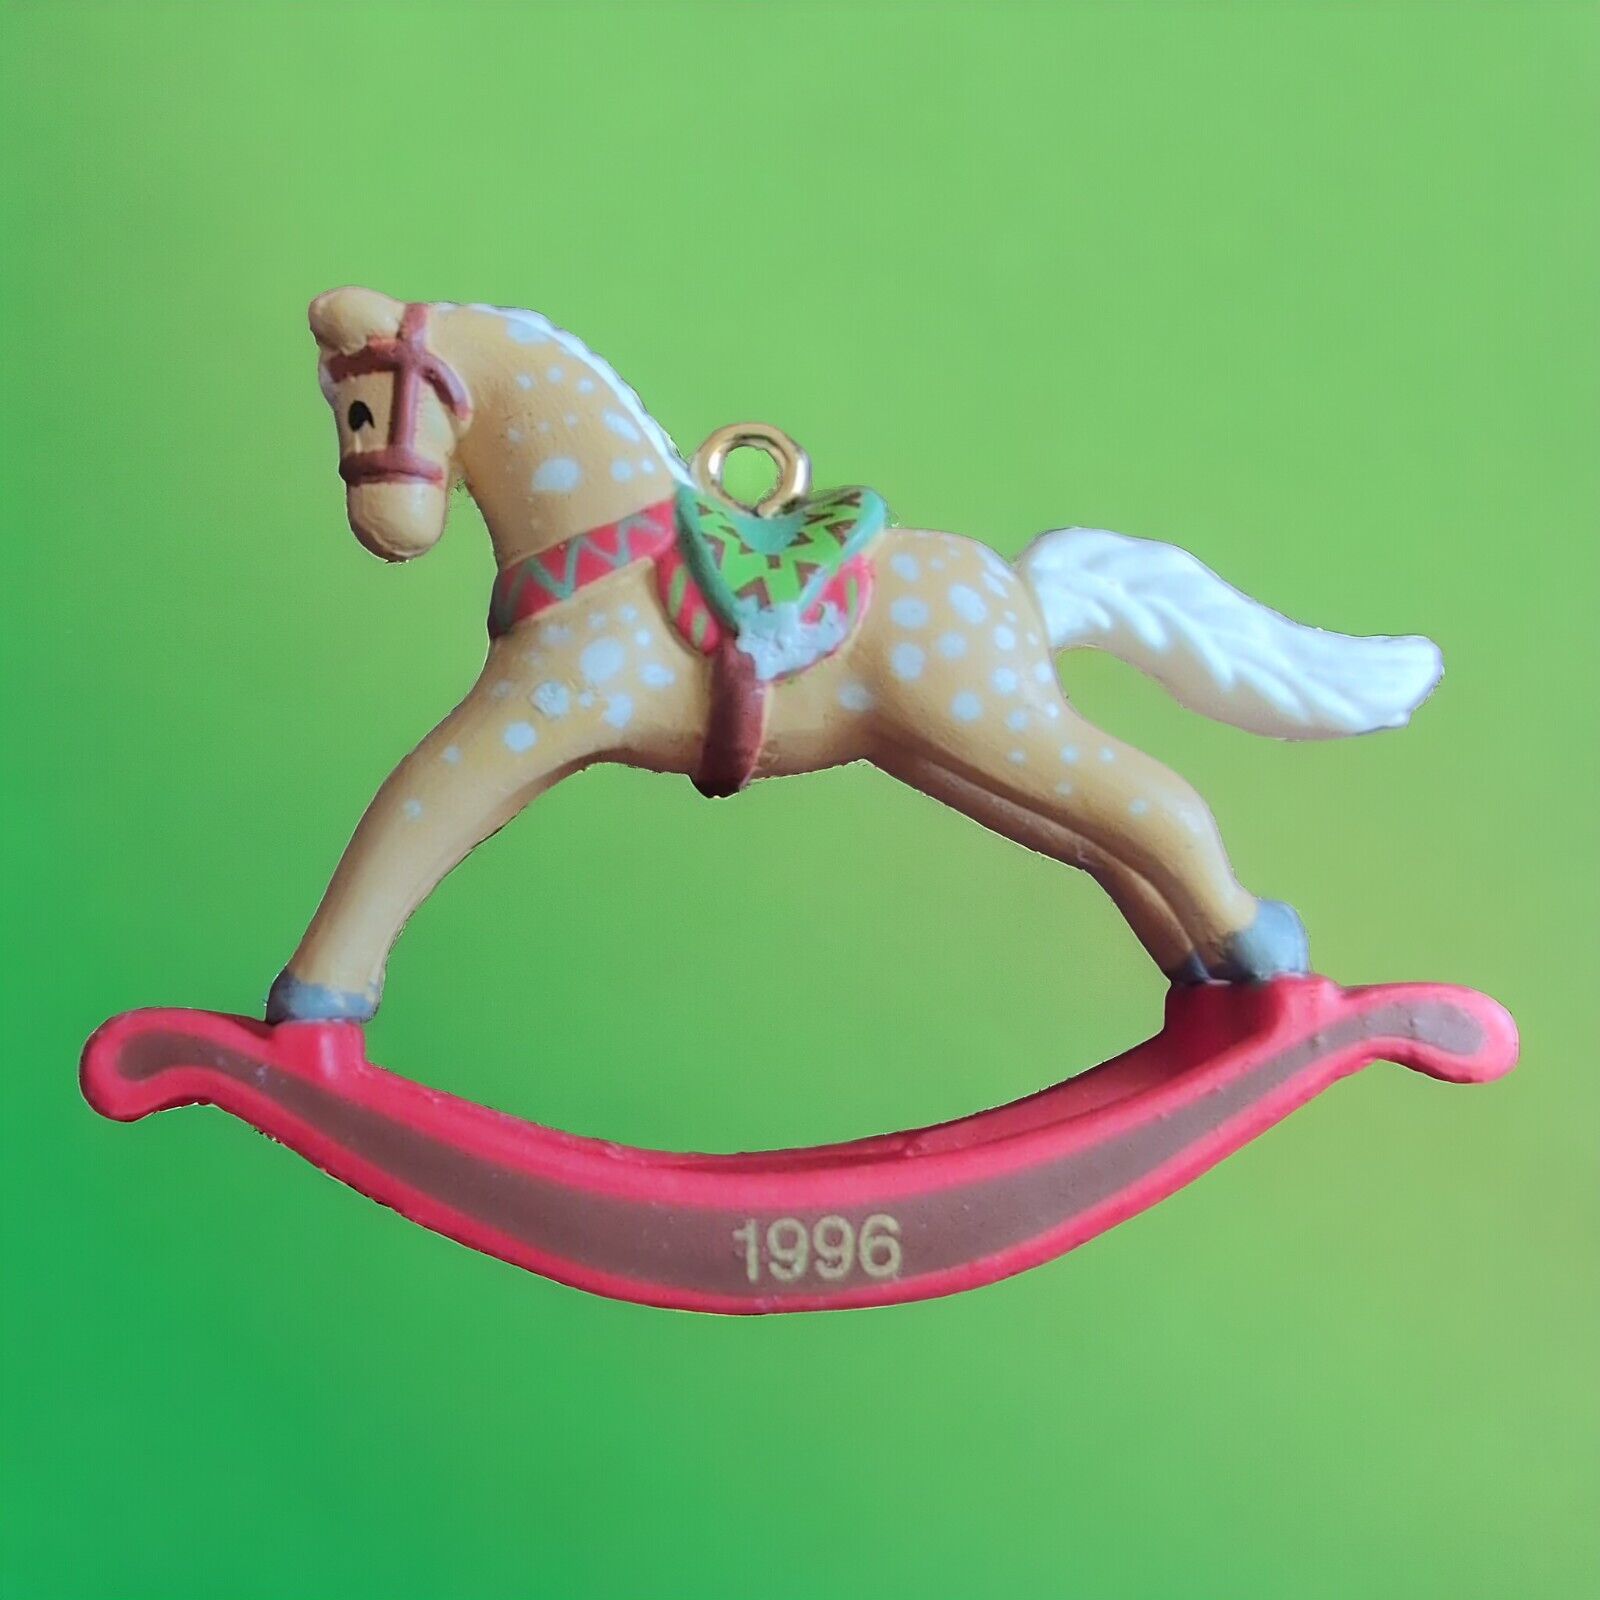 Hallmark Miniature Ornament 1996 Rocking Horse 9th in the Series